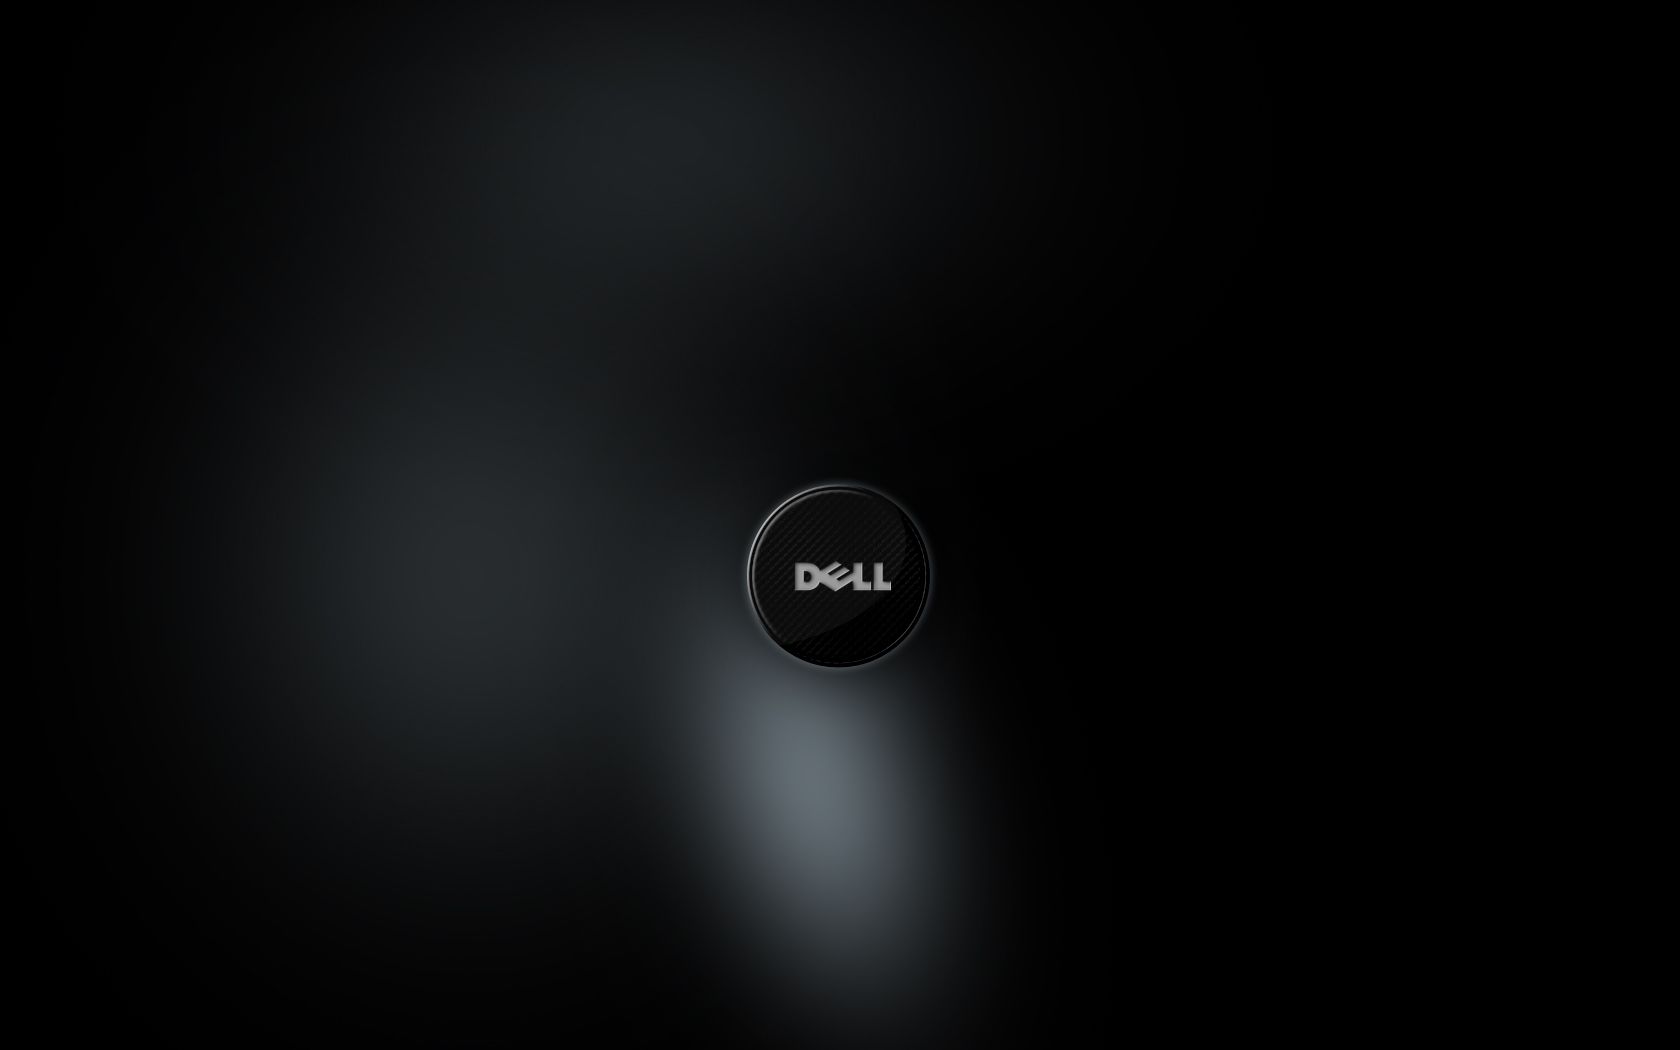 Dell Desktop Background - wallpaper